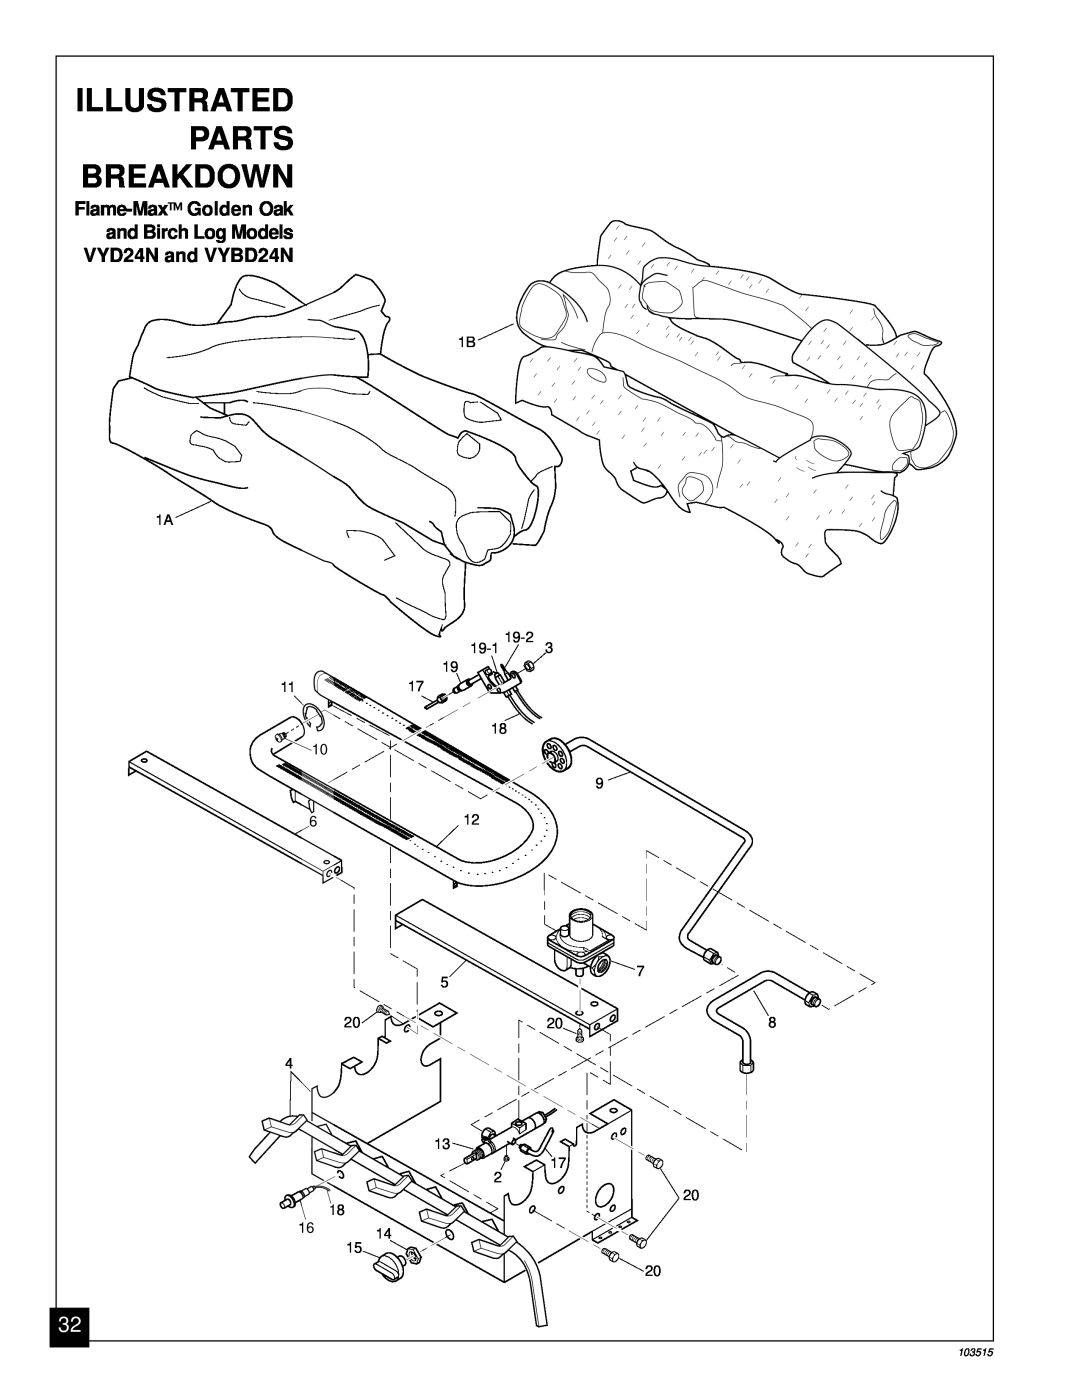 Vanguard Heating Gas Log Heater Illustrated, Parts, Breakdown, Flame-Max Golden Oak, and Birch Log Models 